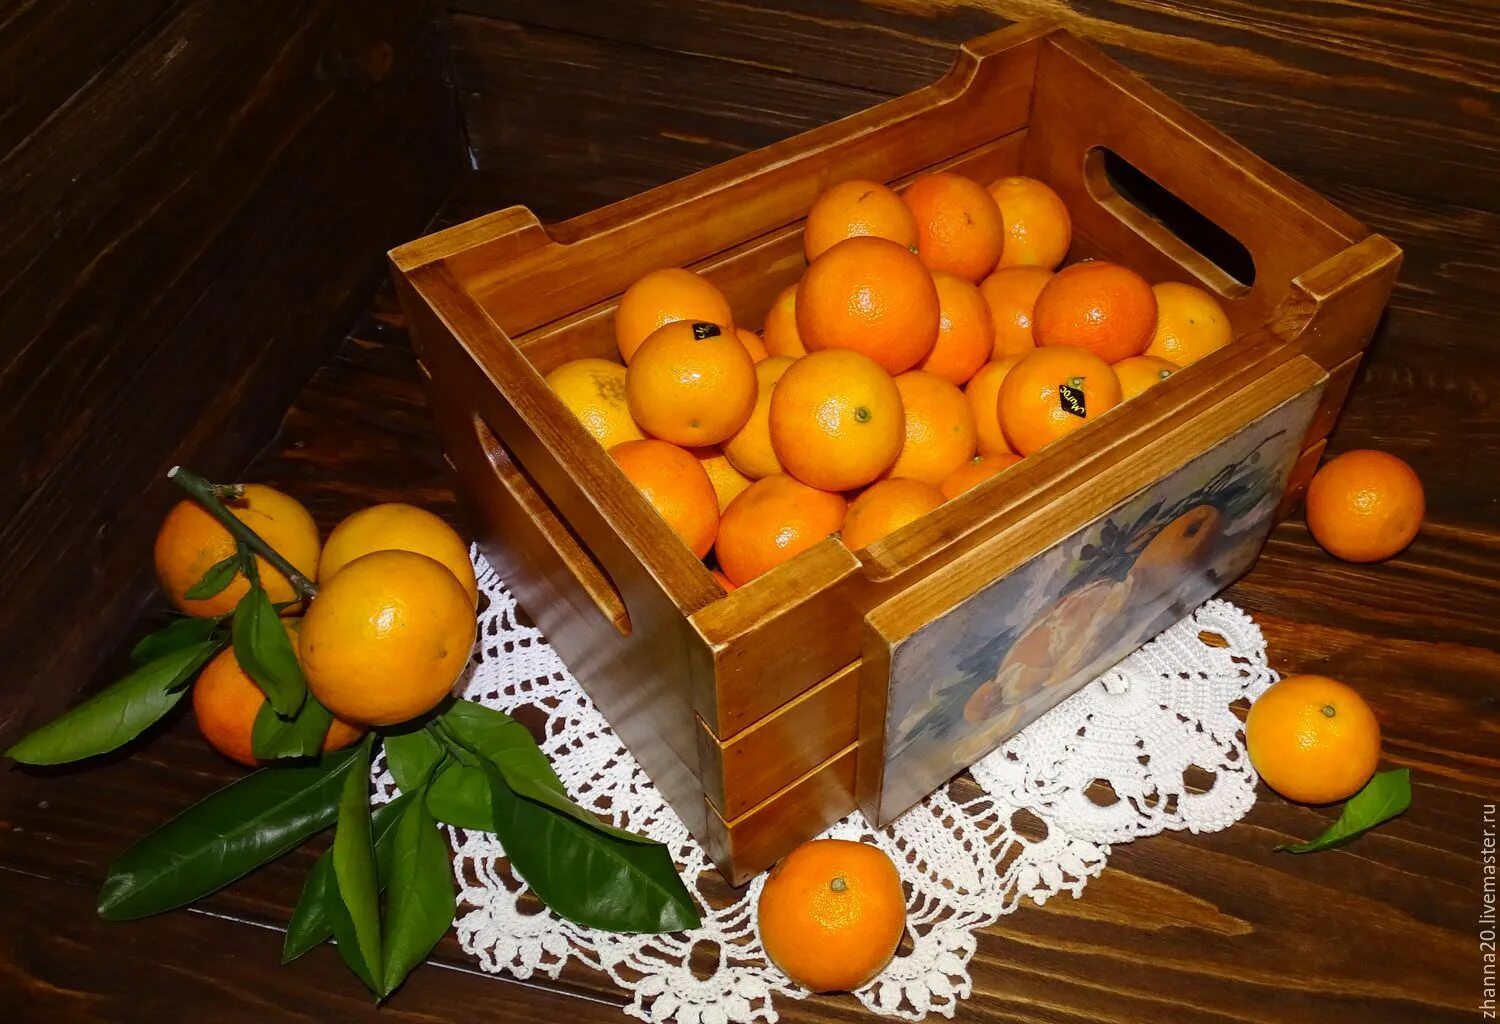 25 мандаринов. Ящик с апельсинами. Ящик с мандаринами. Коробка с мандаринами. Деревянный ящик с мандаринами.